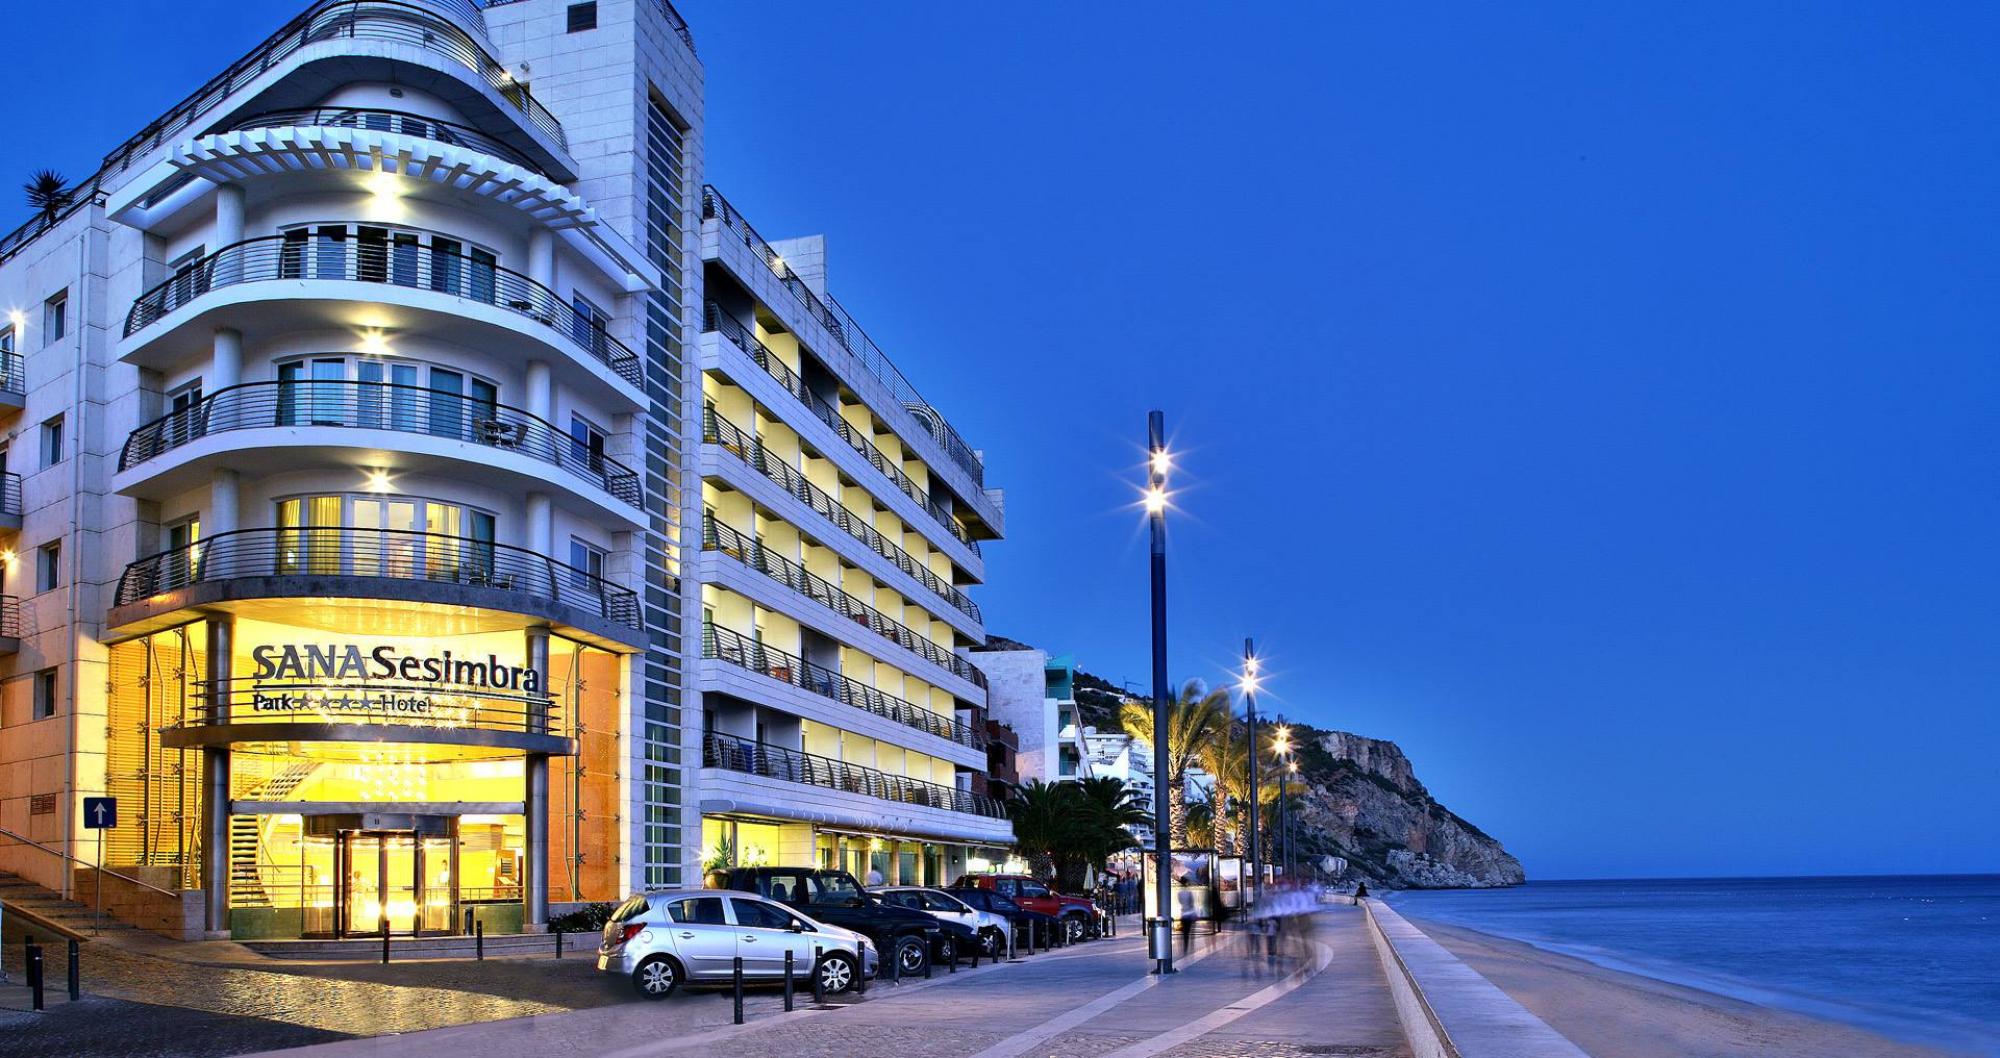 The Sana Sesimbra Hotel's impressive hotel within brilliant Lisbon.